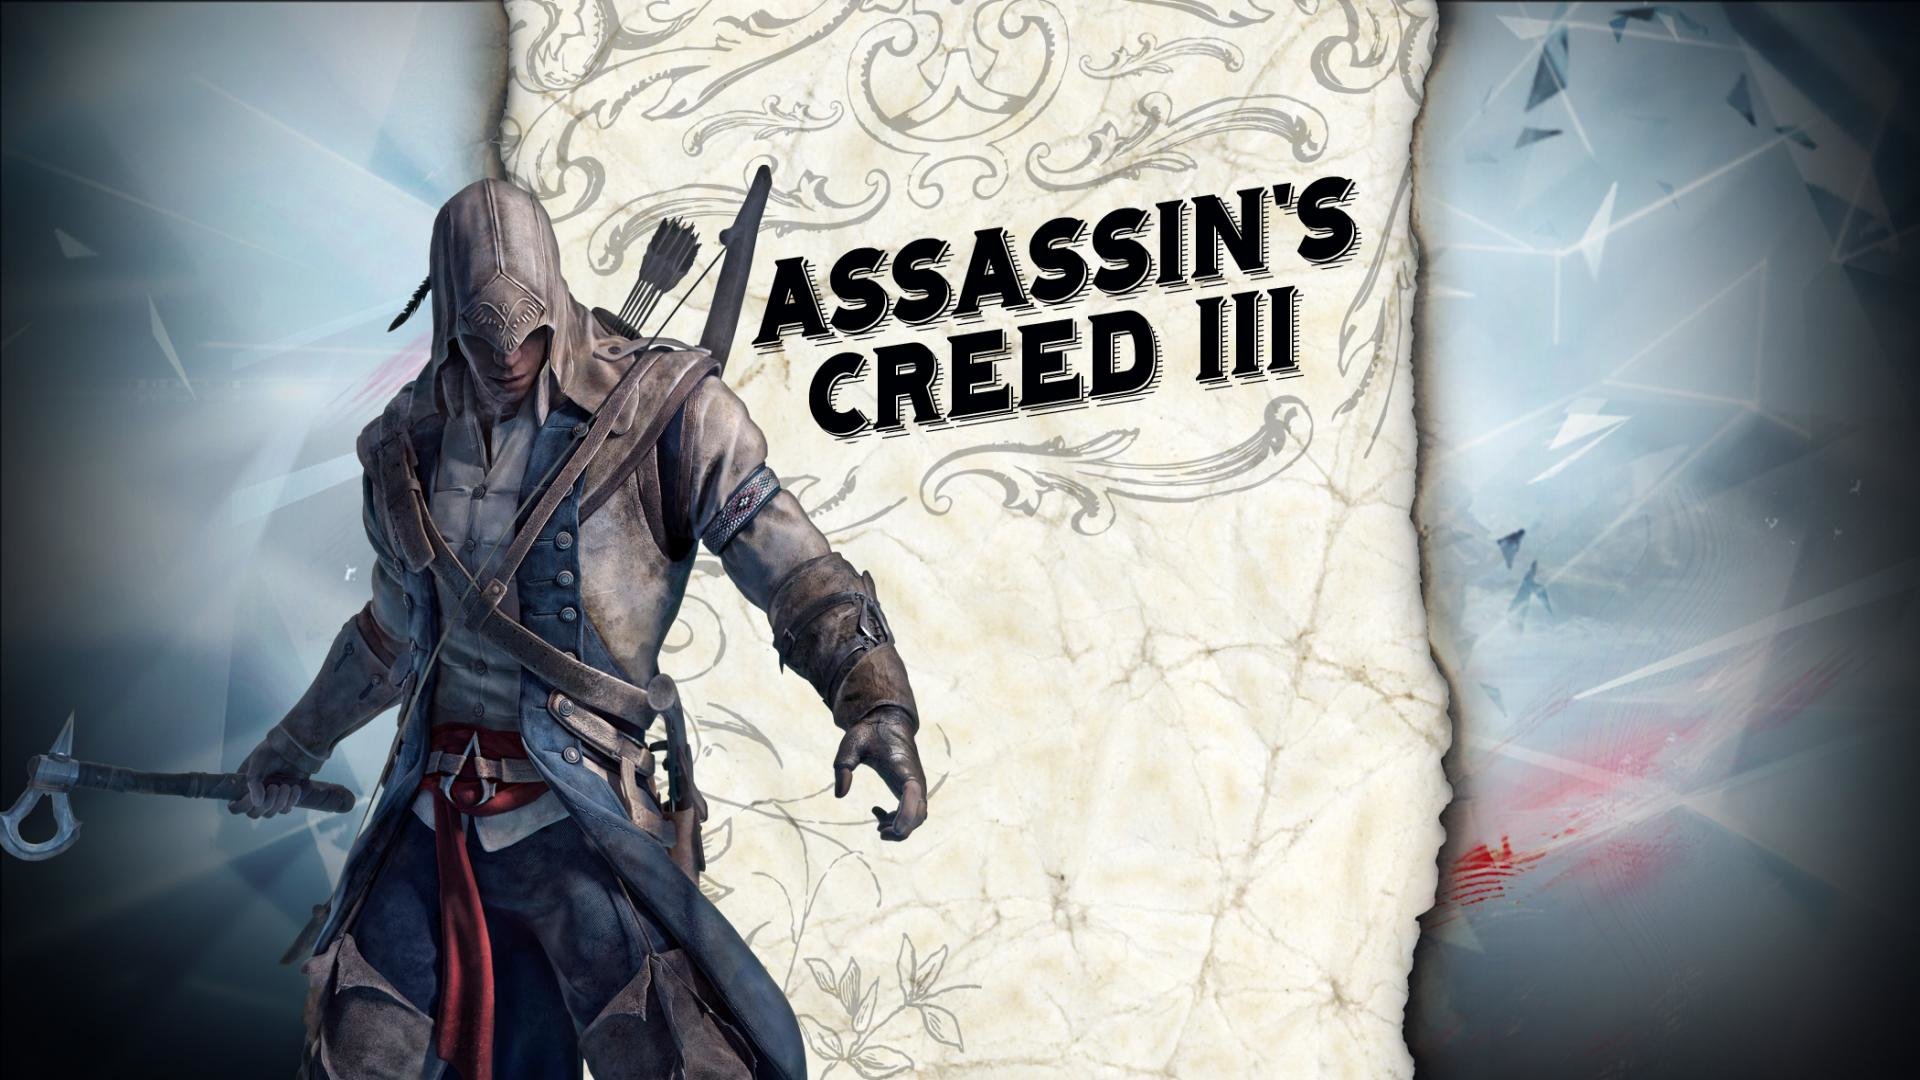 Best Assassin's Creed 3 wallpaper ID:447270 for High Resolution hd 1920x1080 desktop